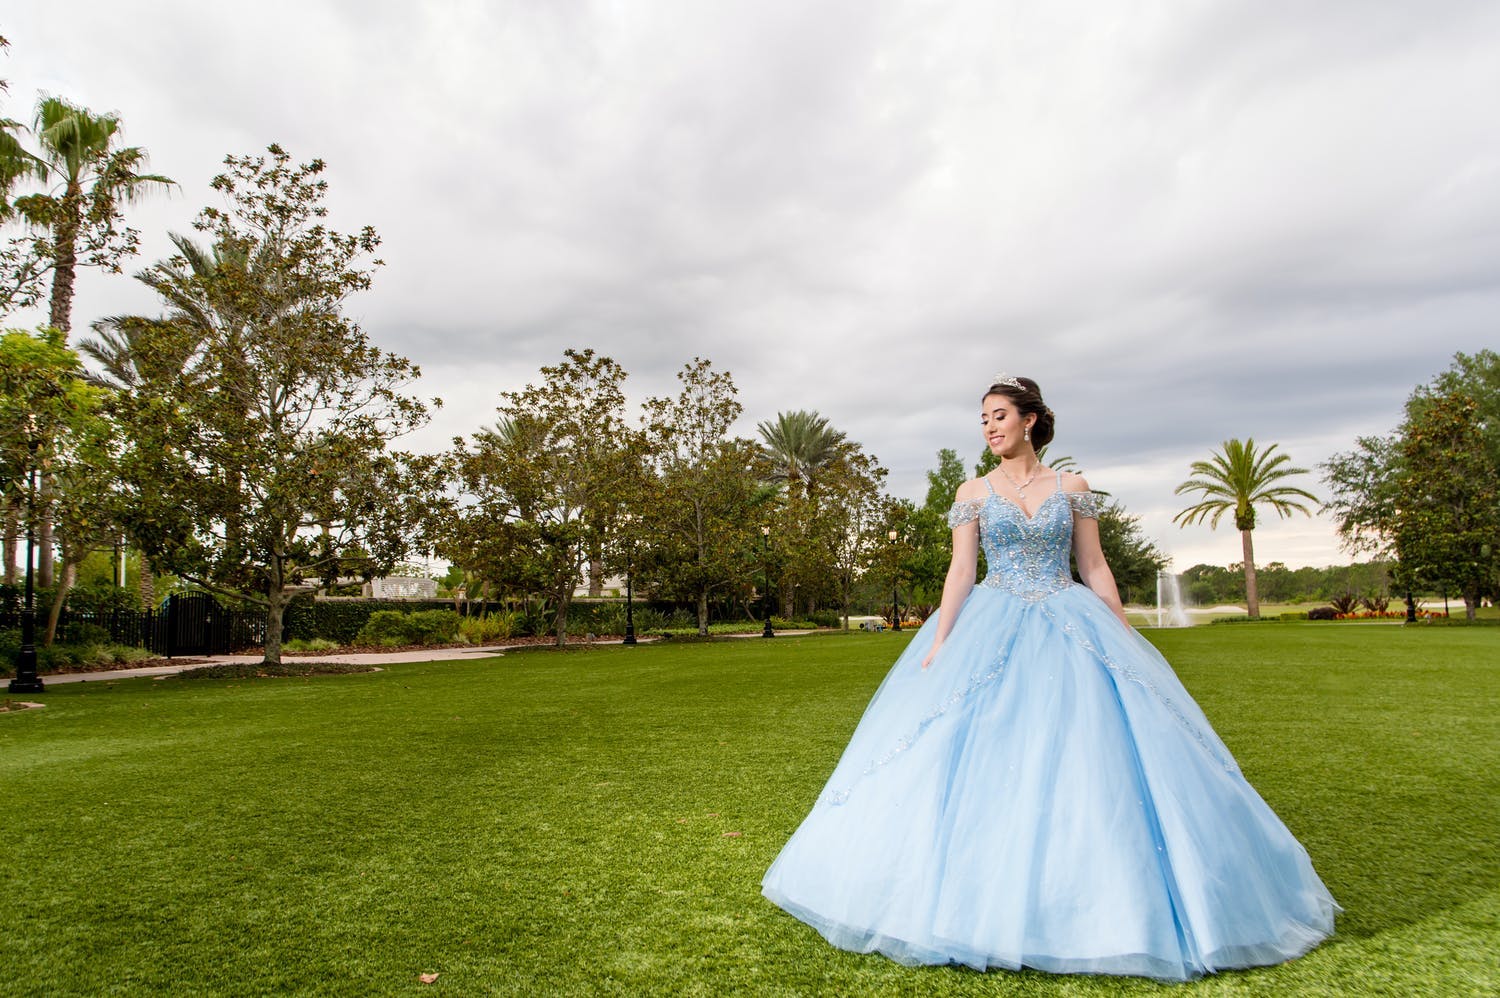 Quinceañera wears blue Cinderalla-style ballgown for her quinceañera celebration | PartySlate